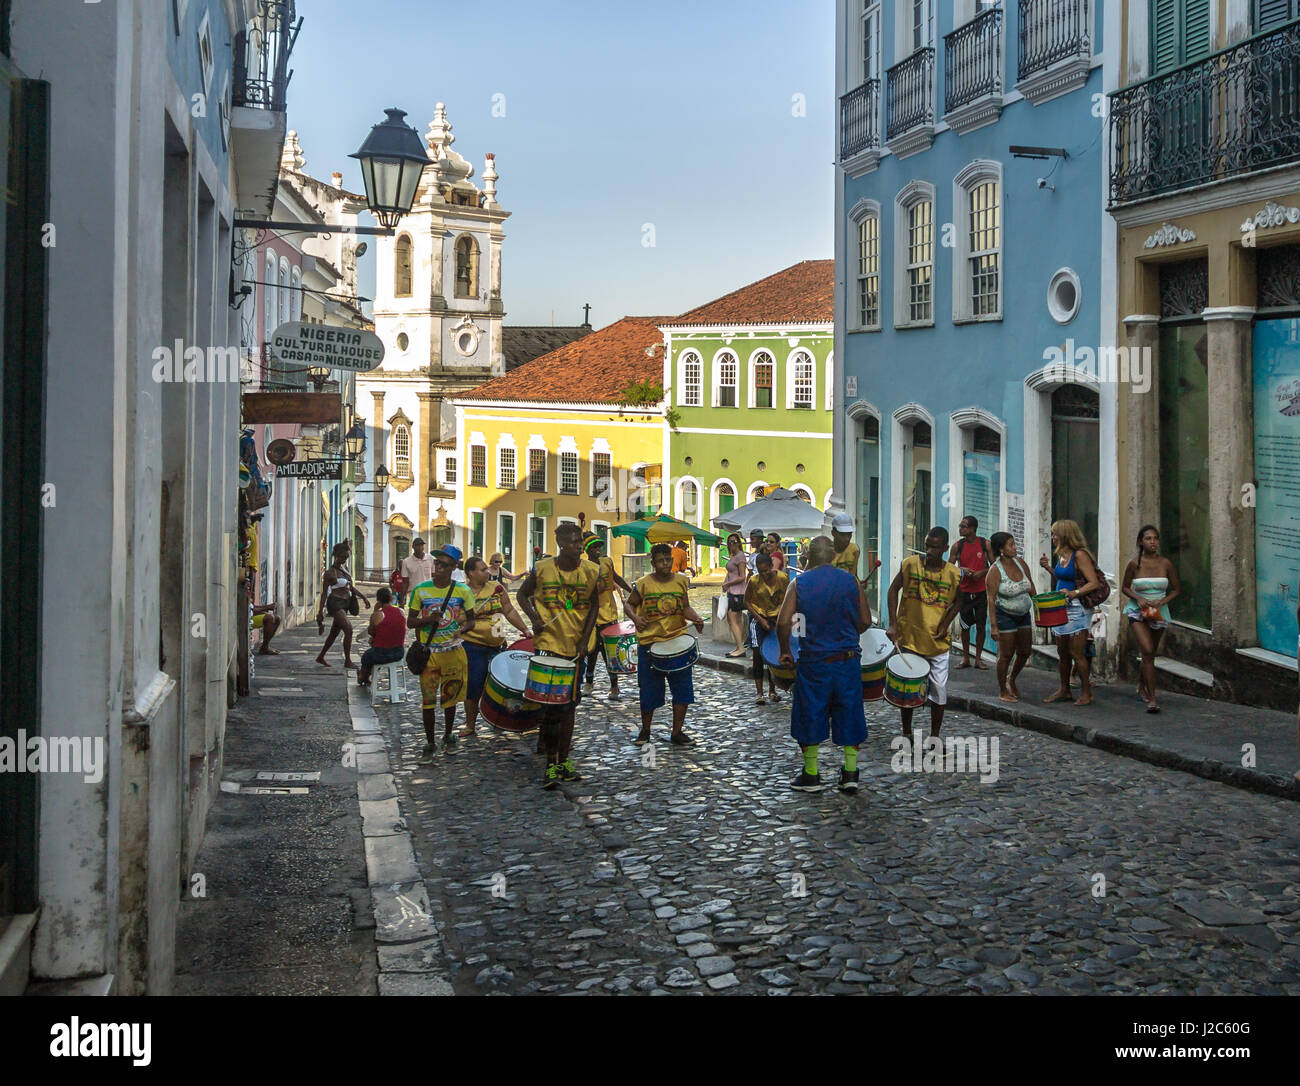 Brazilian drumming group on the streets of Pelourinho - Salvador, Bahia, Brazil Stock Photo